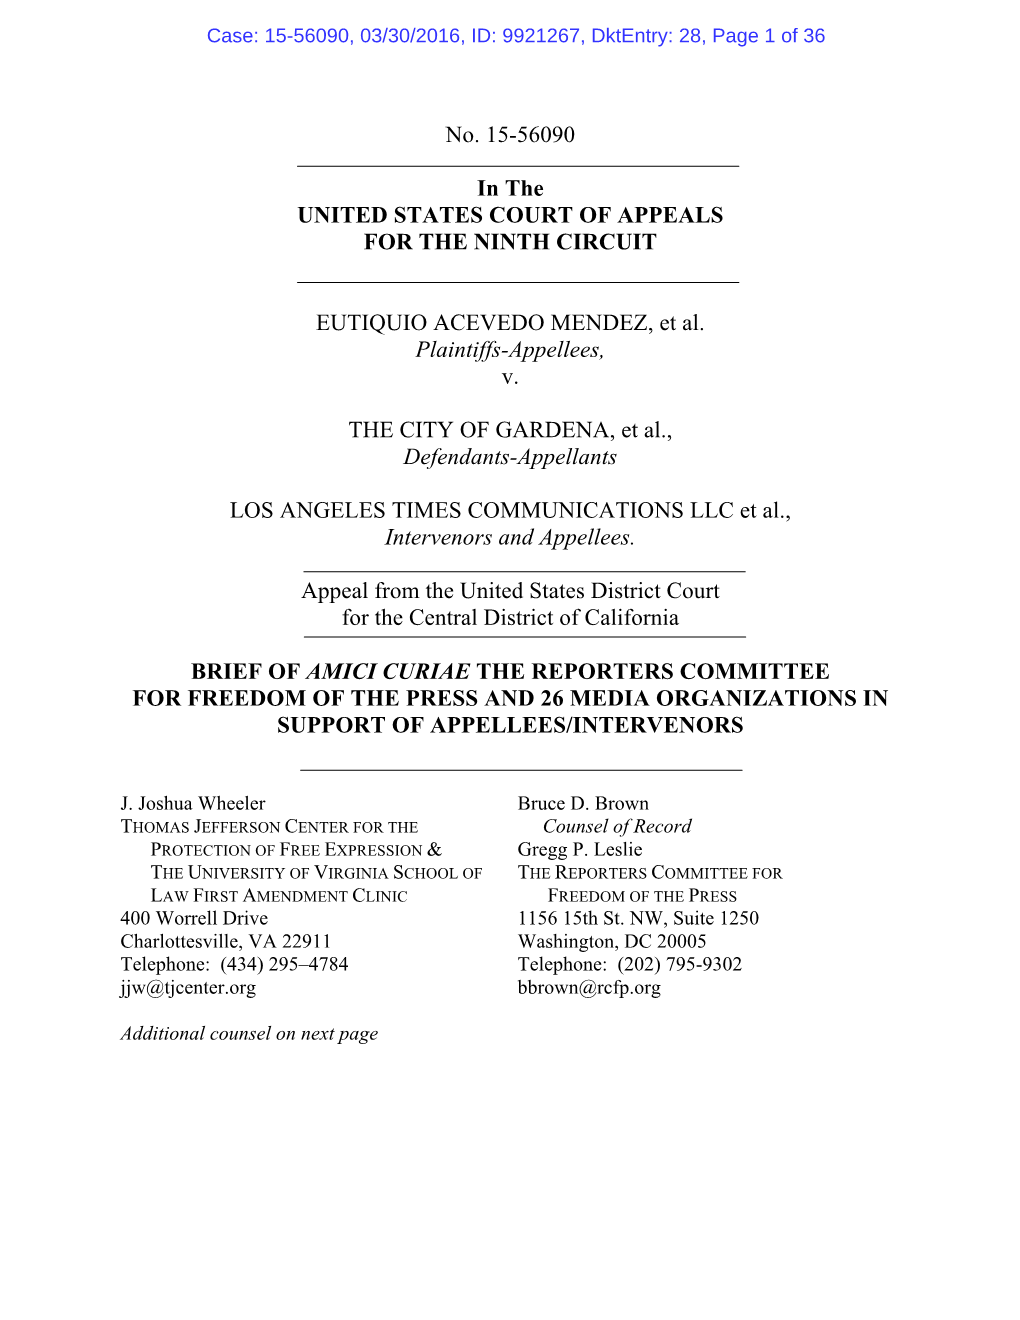 No. 15-56090 in the UNITED STATES COURT of APPEALS for the NINTH CIRCUIT EUTIQUIO ACEVEDO MENDEZ, Et Al. Plaintiffs-Appellees, V